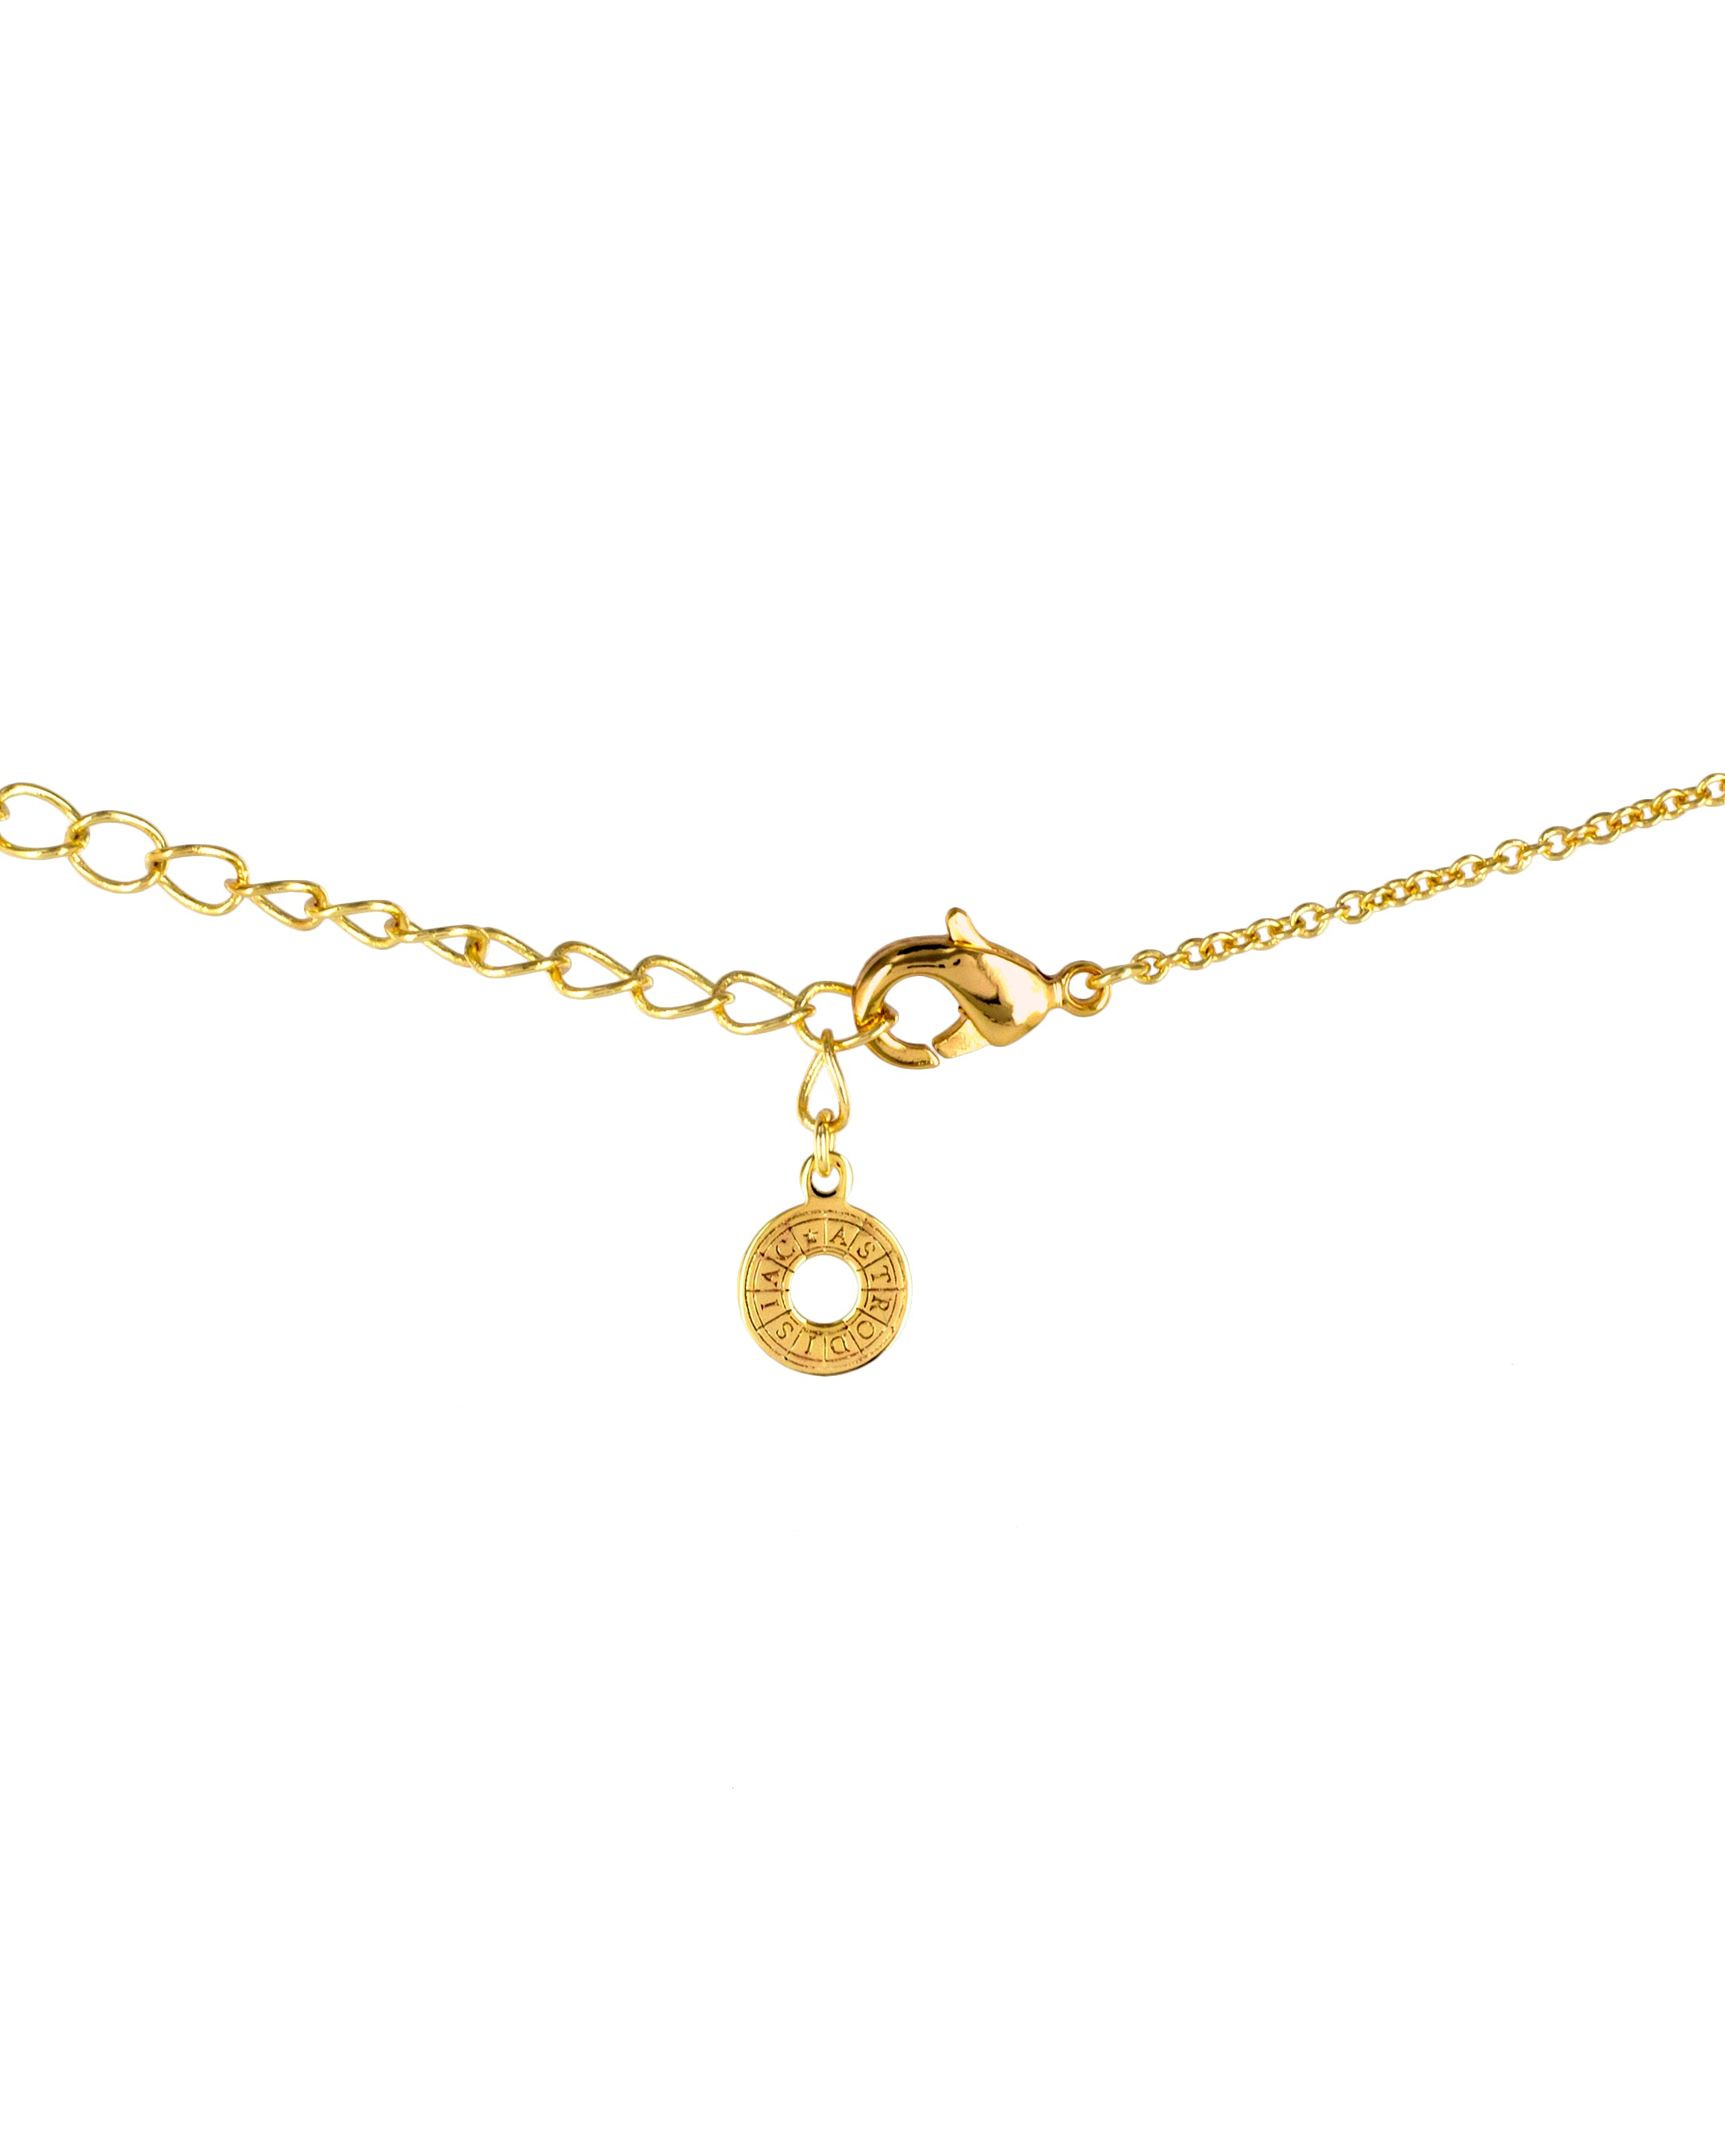 astrologie collier scorpion- astrodisiac - bijoux - paris - claire naa - jewels - necklace scorpio- astrology